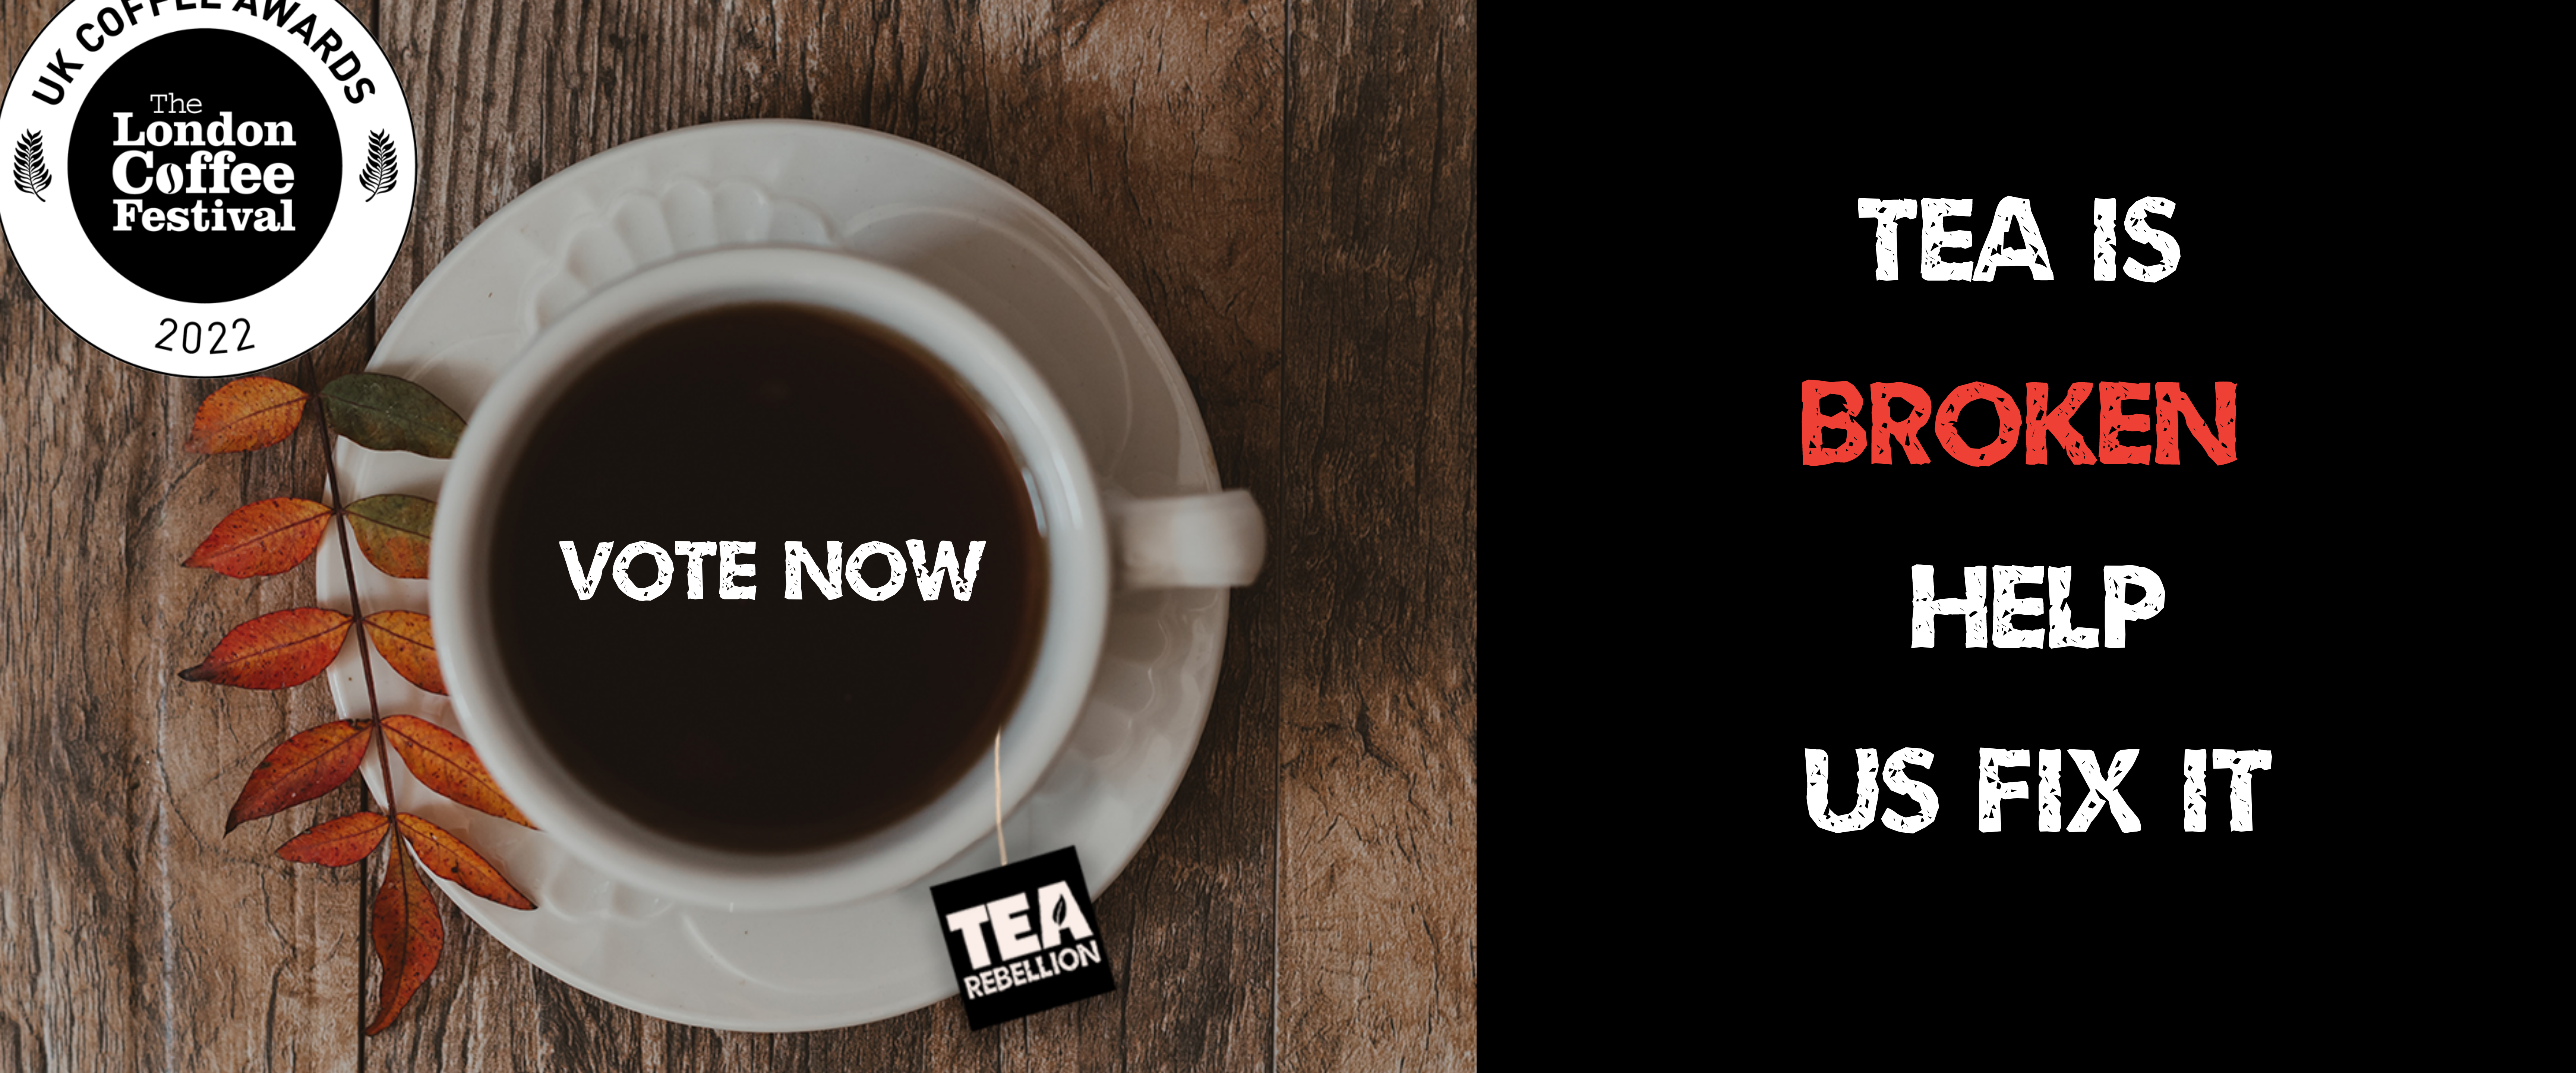 Best Tea Company Nomination - Vote NOW to help us win! - tearebellion